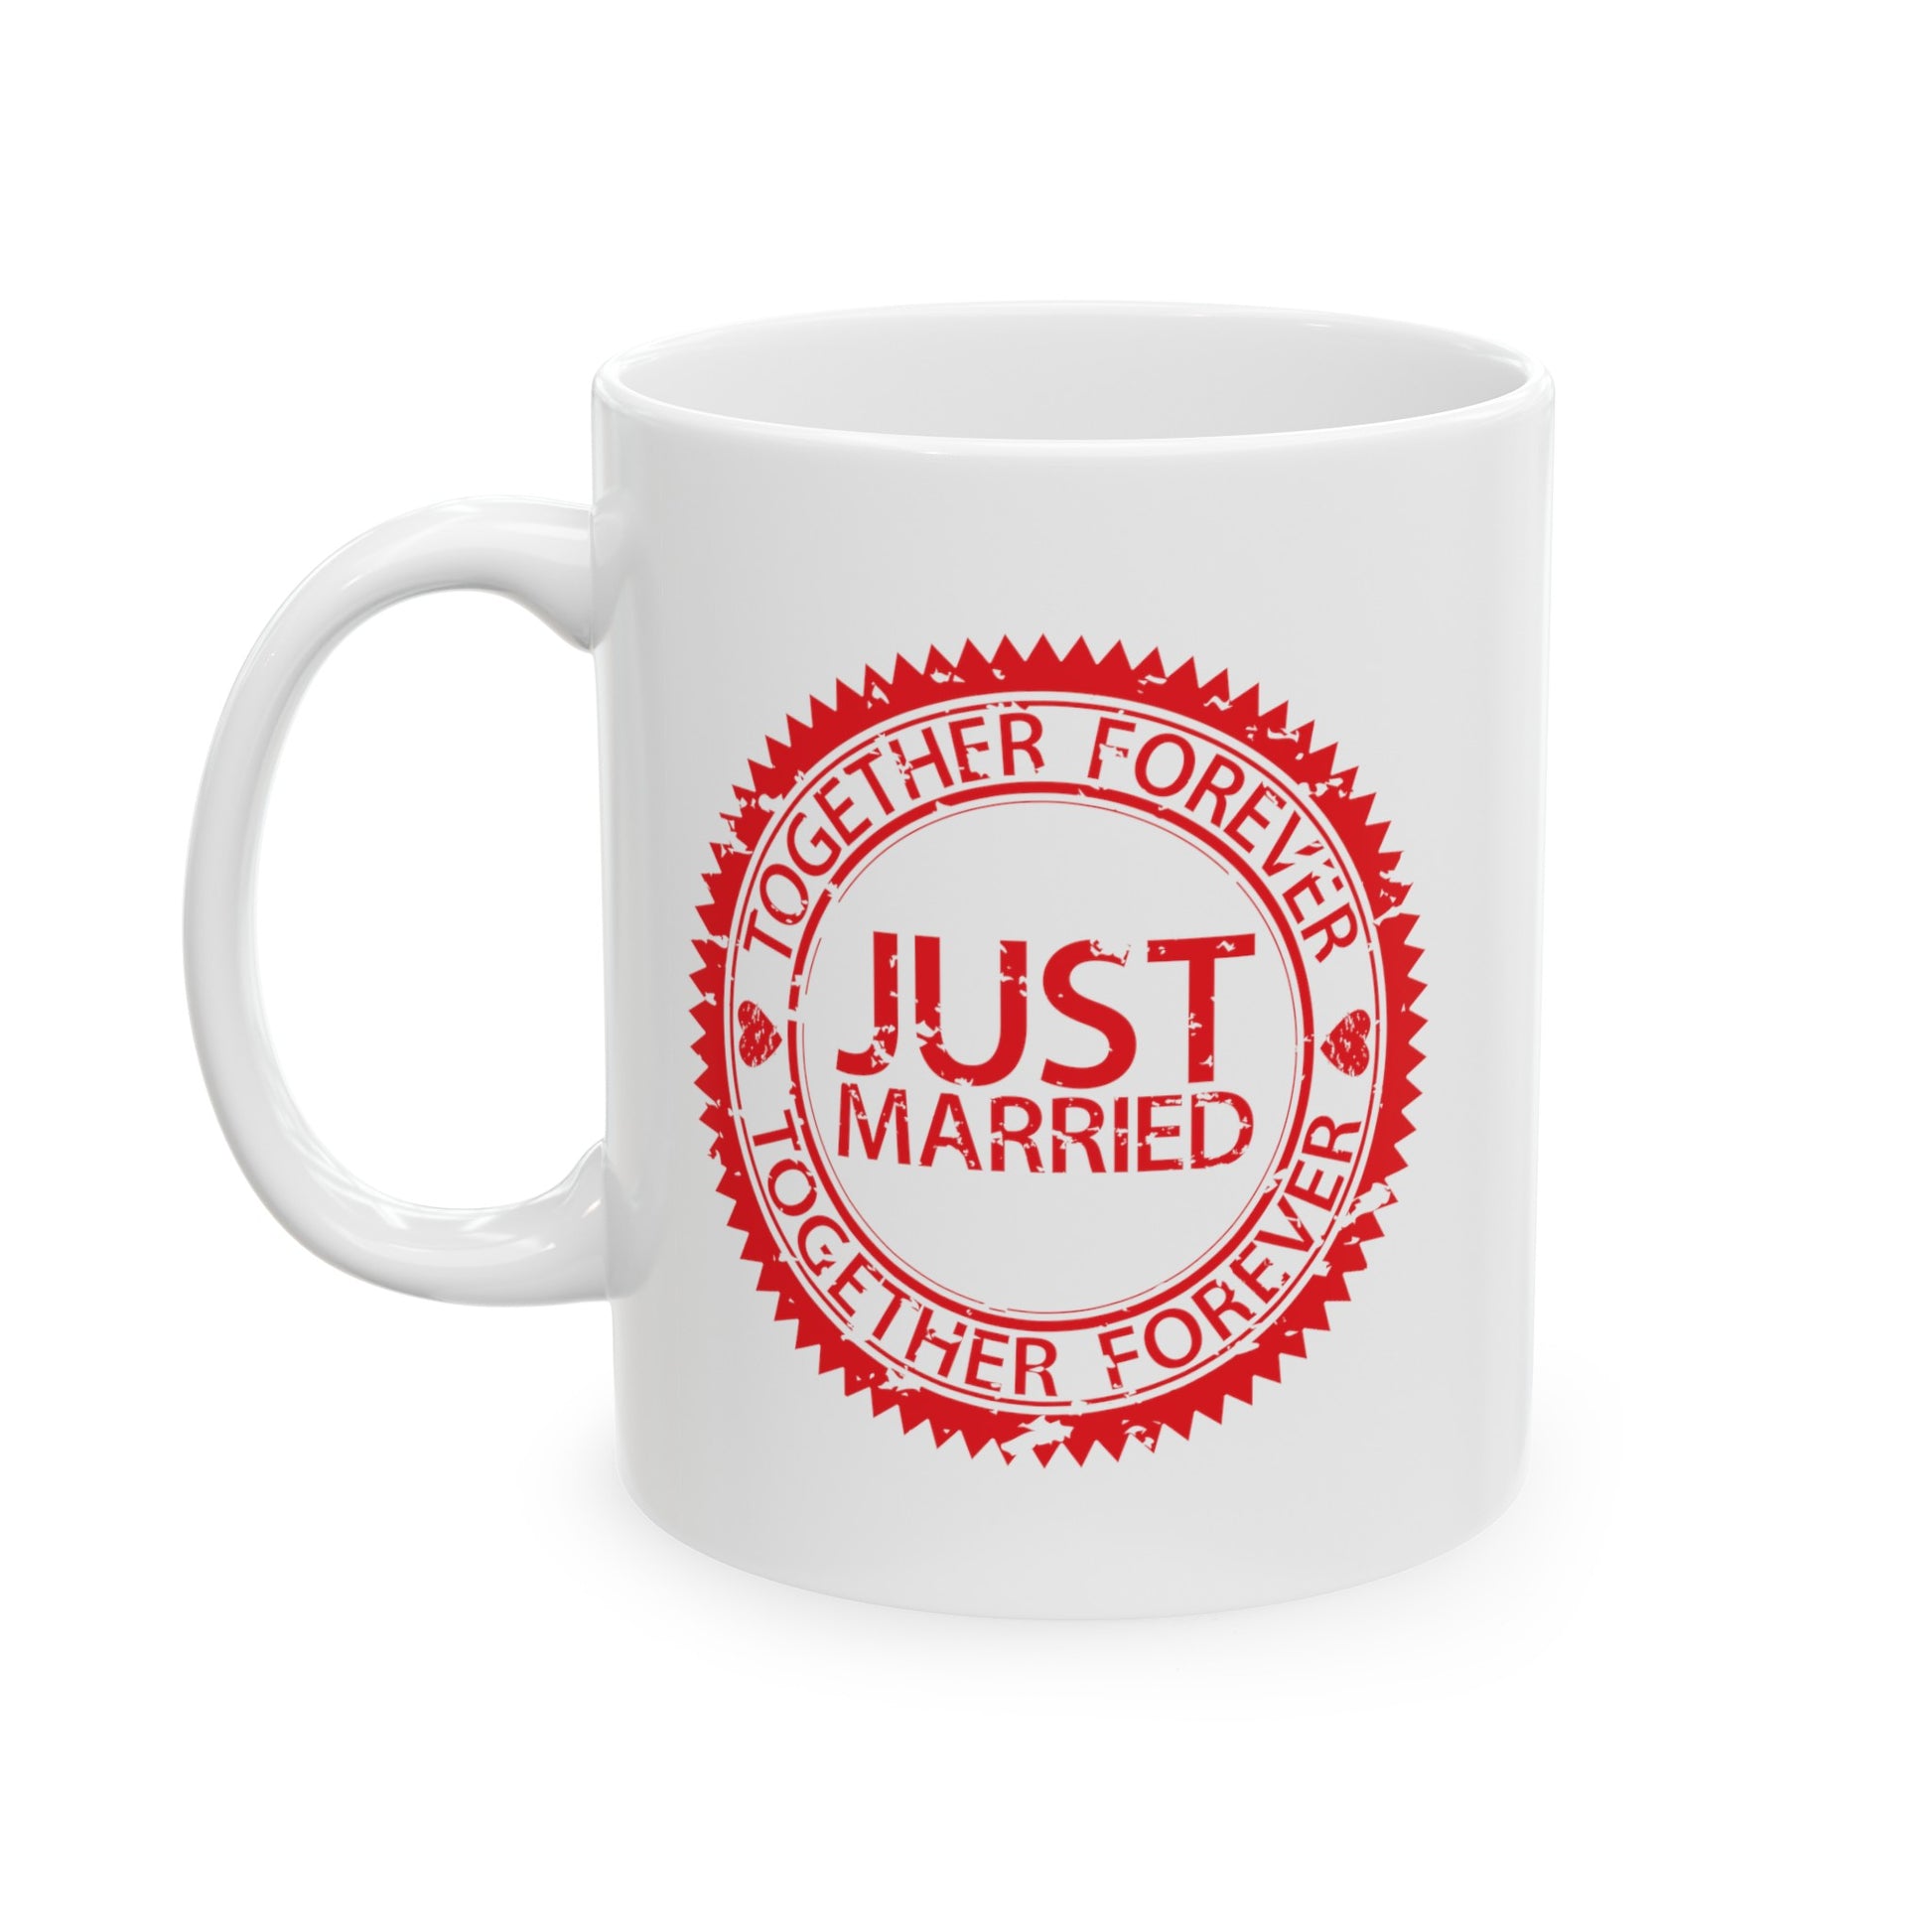 Just Married Coffee Mug - Double Sided White Ceramic 11oz by TheGlassyLass.com